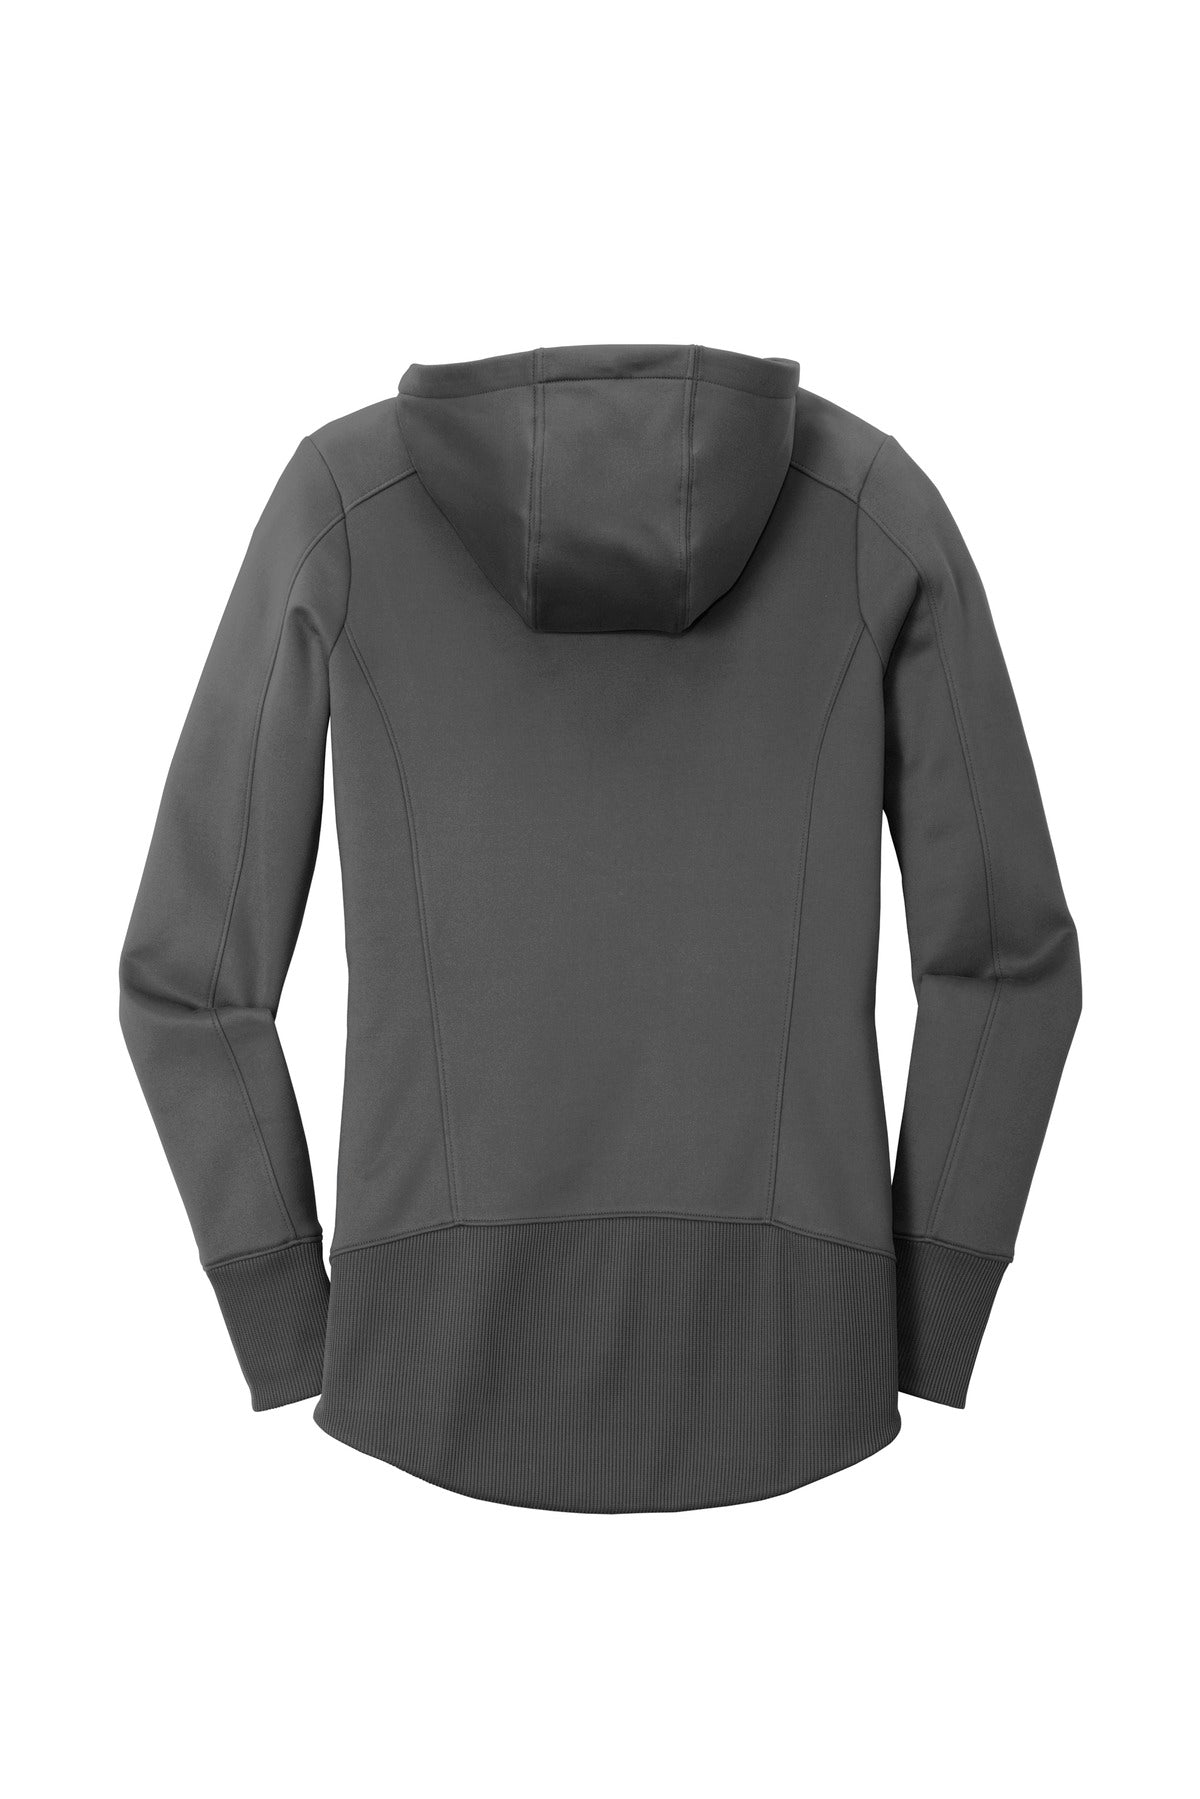 New Era Ladies Venue Fleece Full-Zip Hoodie. LNEA522